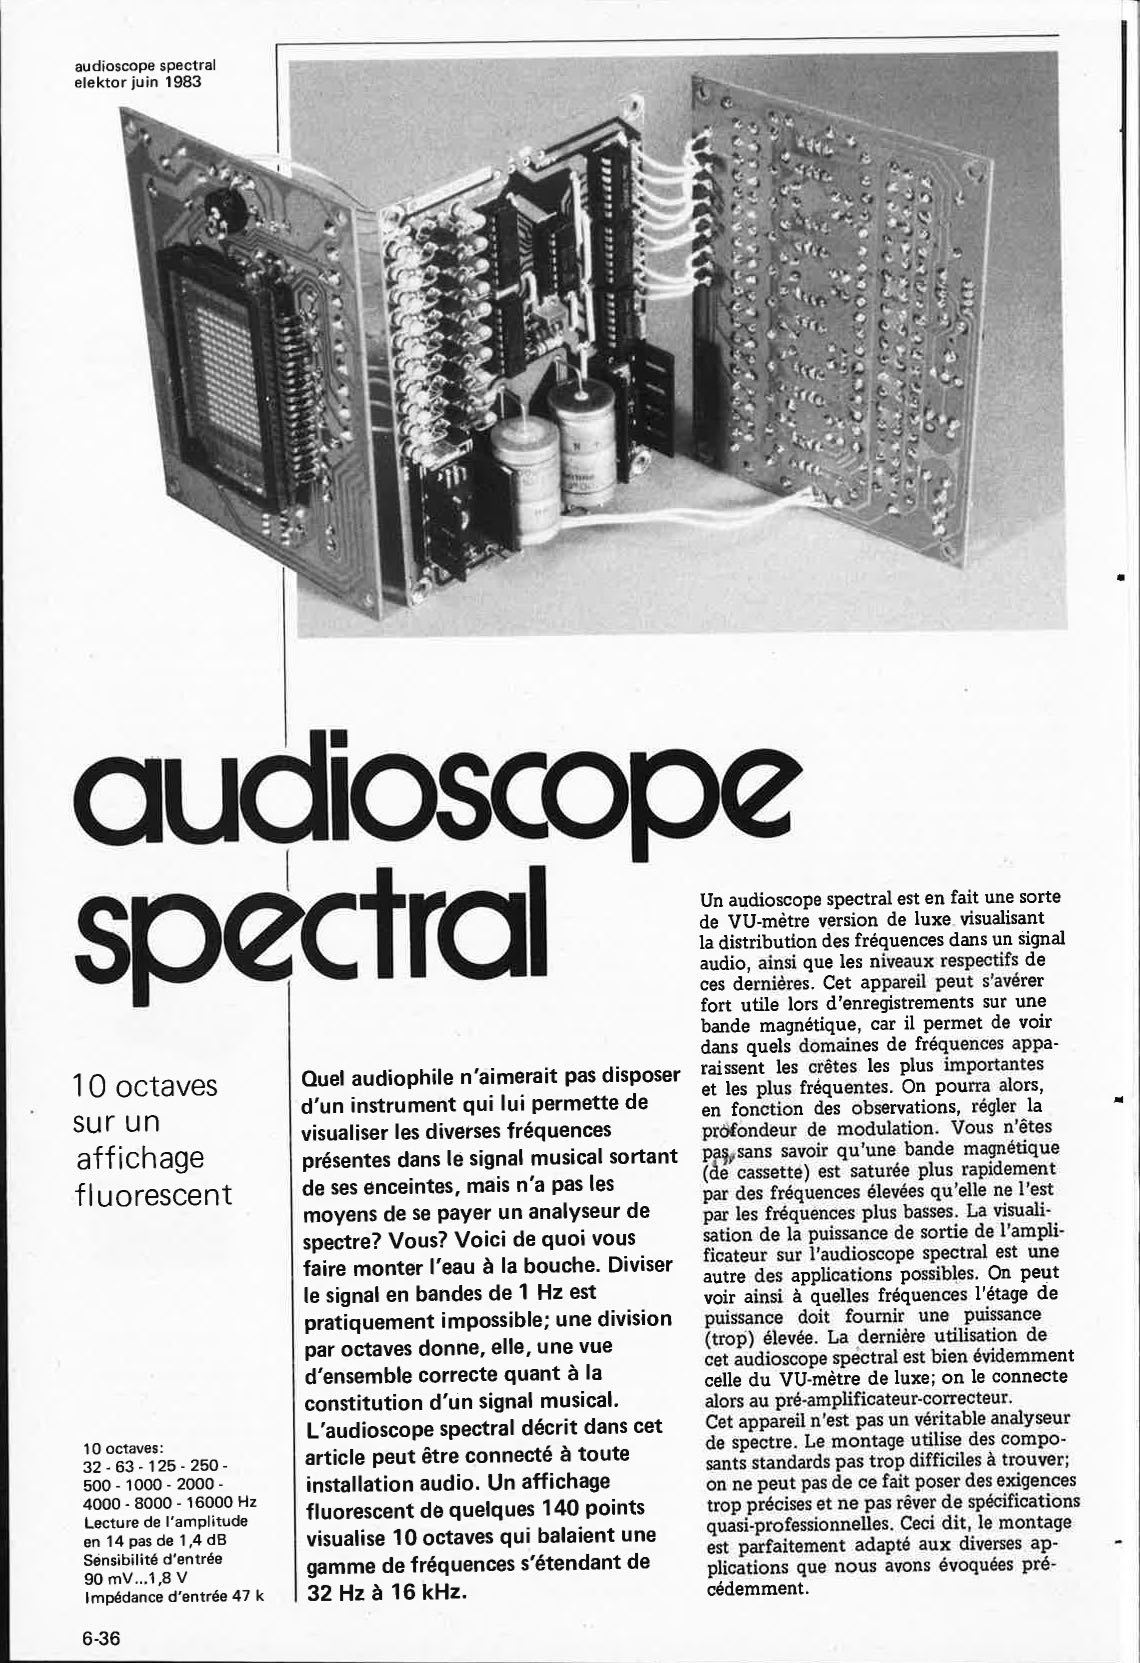 audioscope spectral